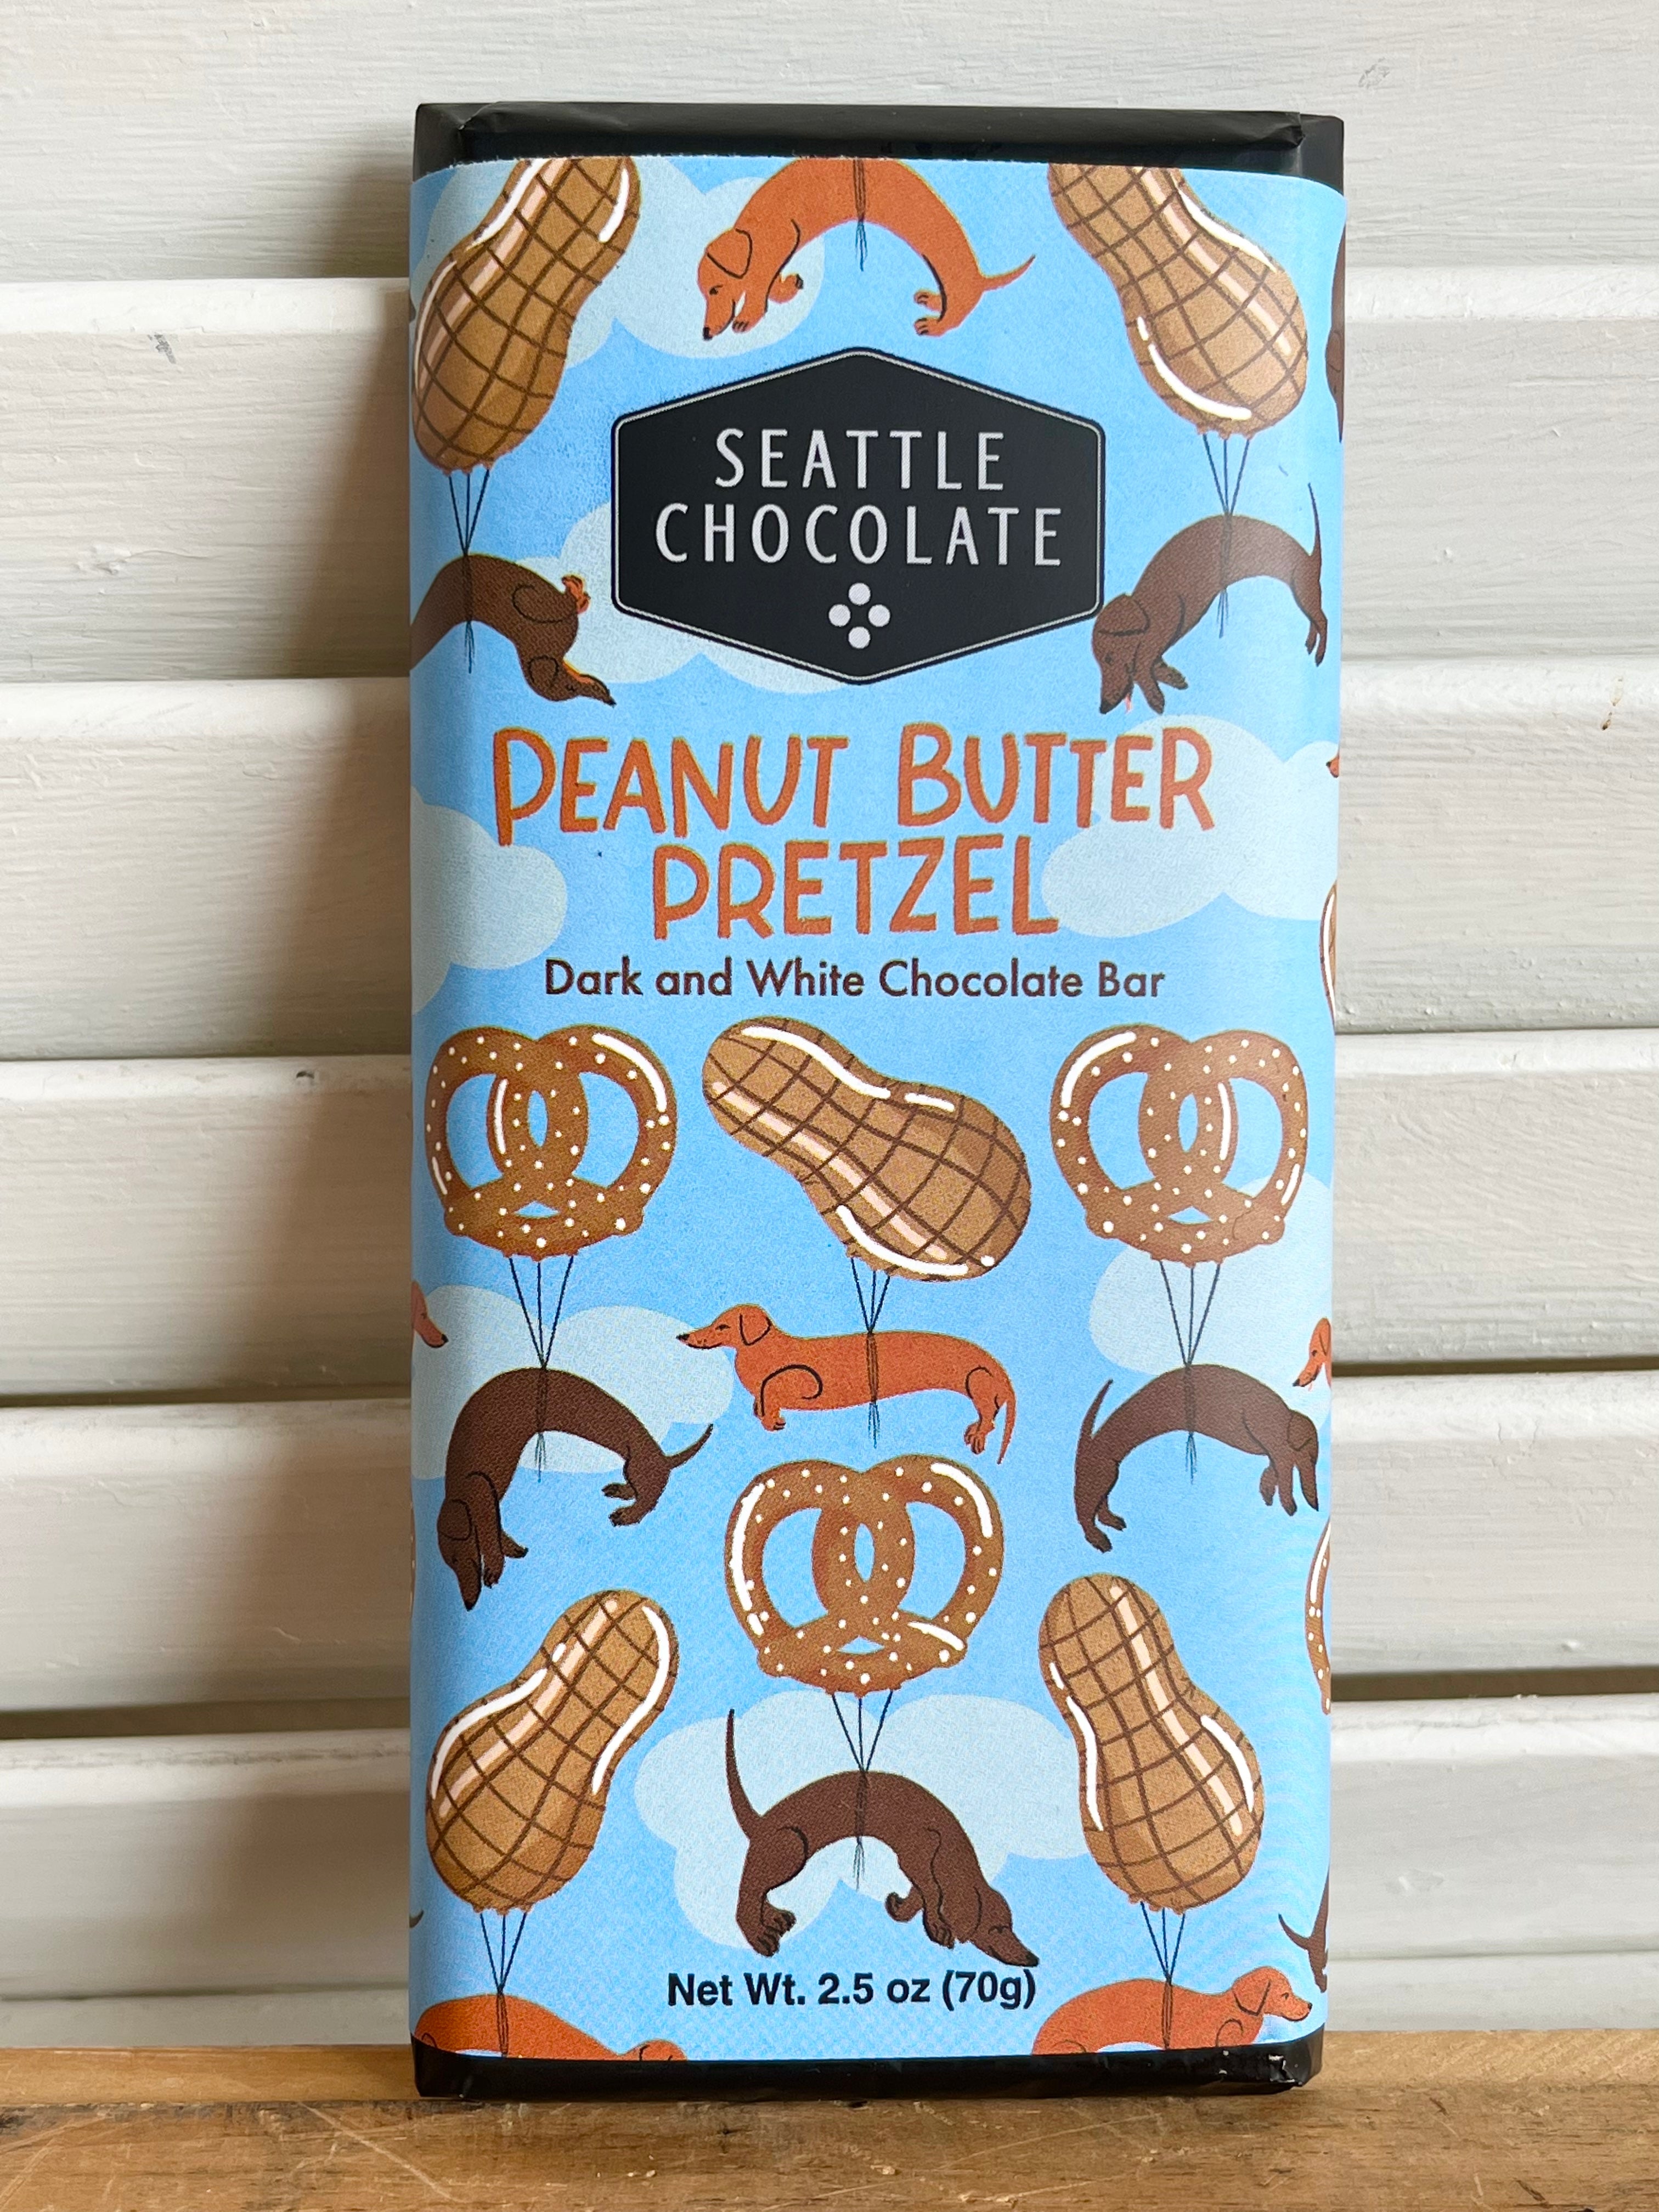 Chocolate Truffle Bars from Seattle Chocolate